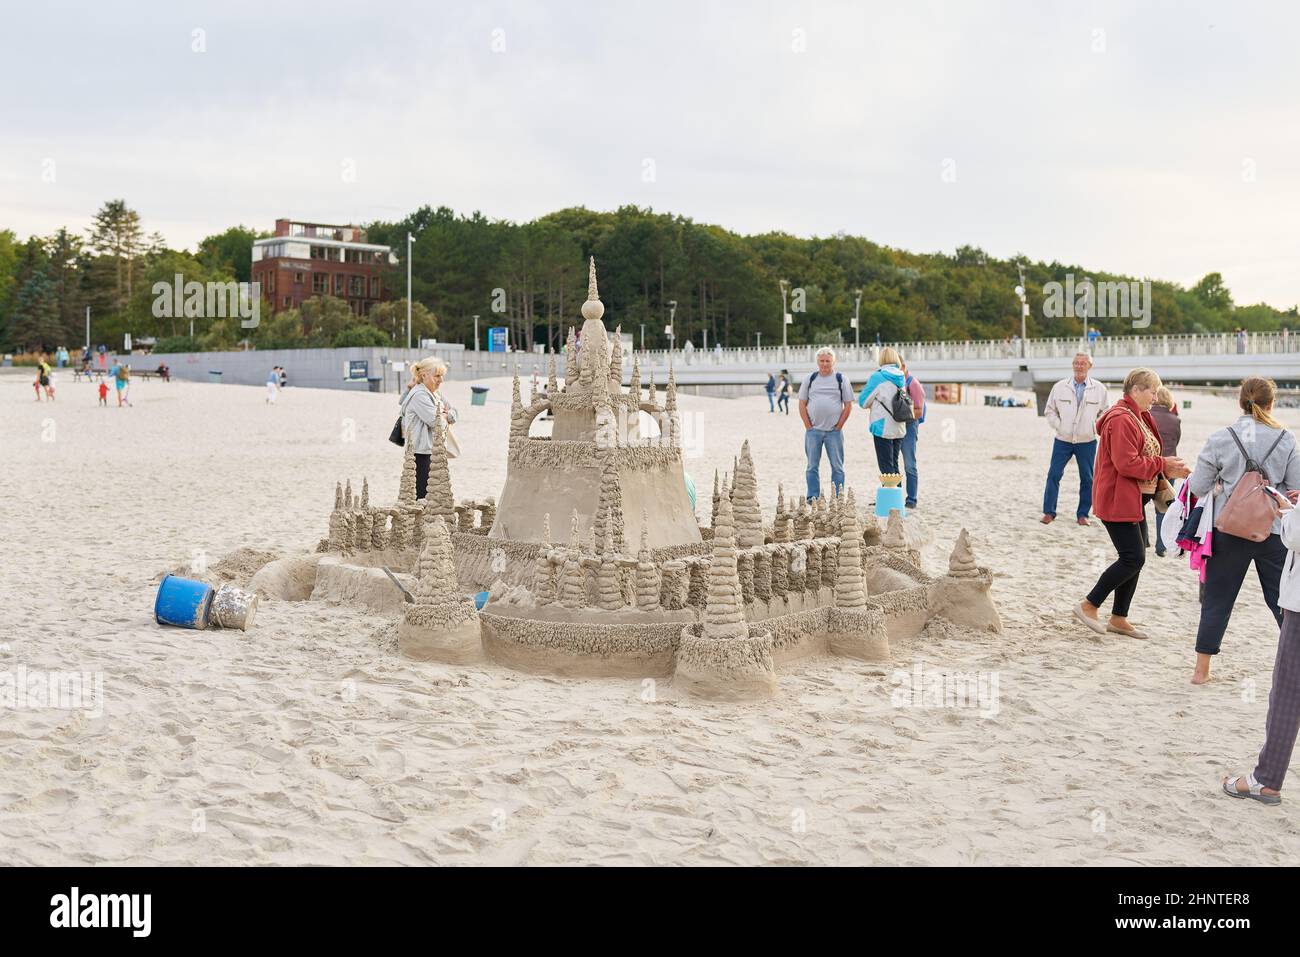 Holidaymakers admire a sandcastle on the beach of Kolobrzeg on the Polish coast of the Baltic Sea Stock Photo